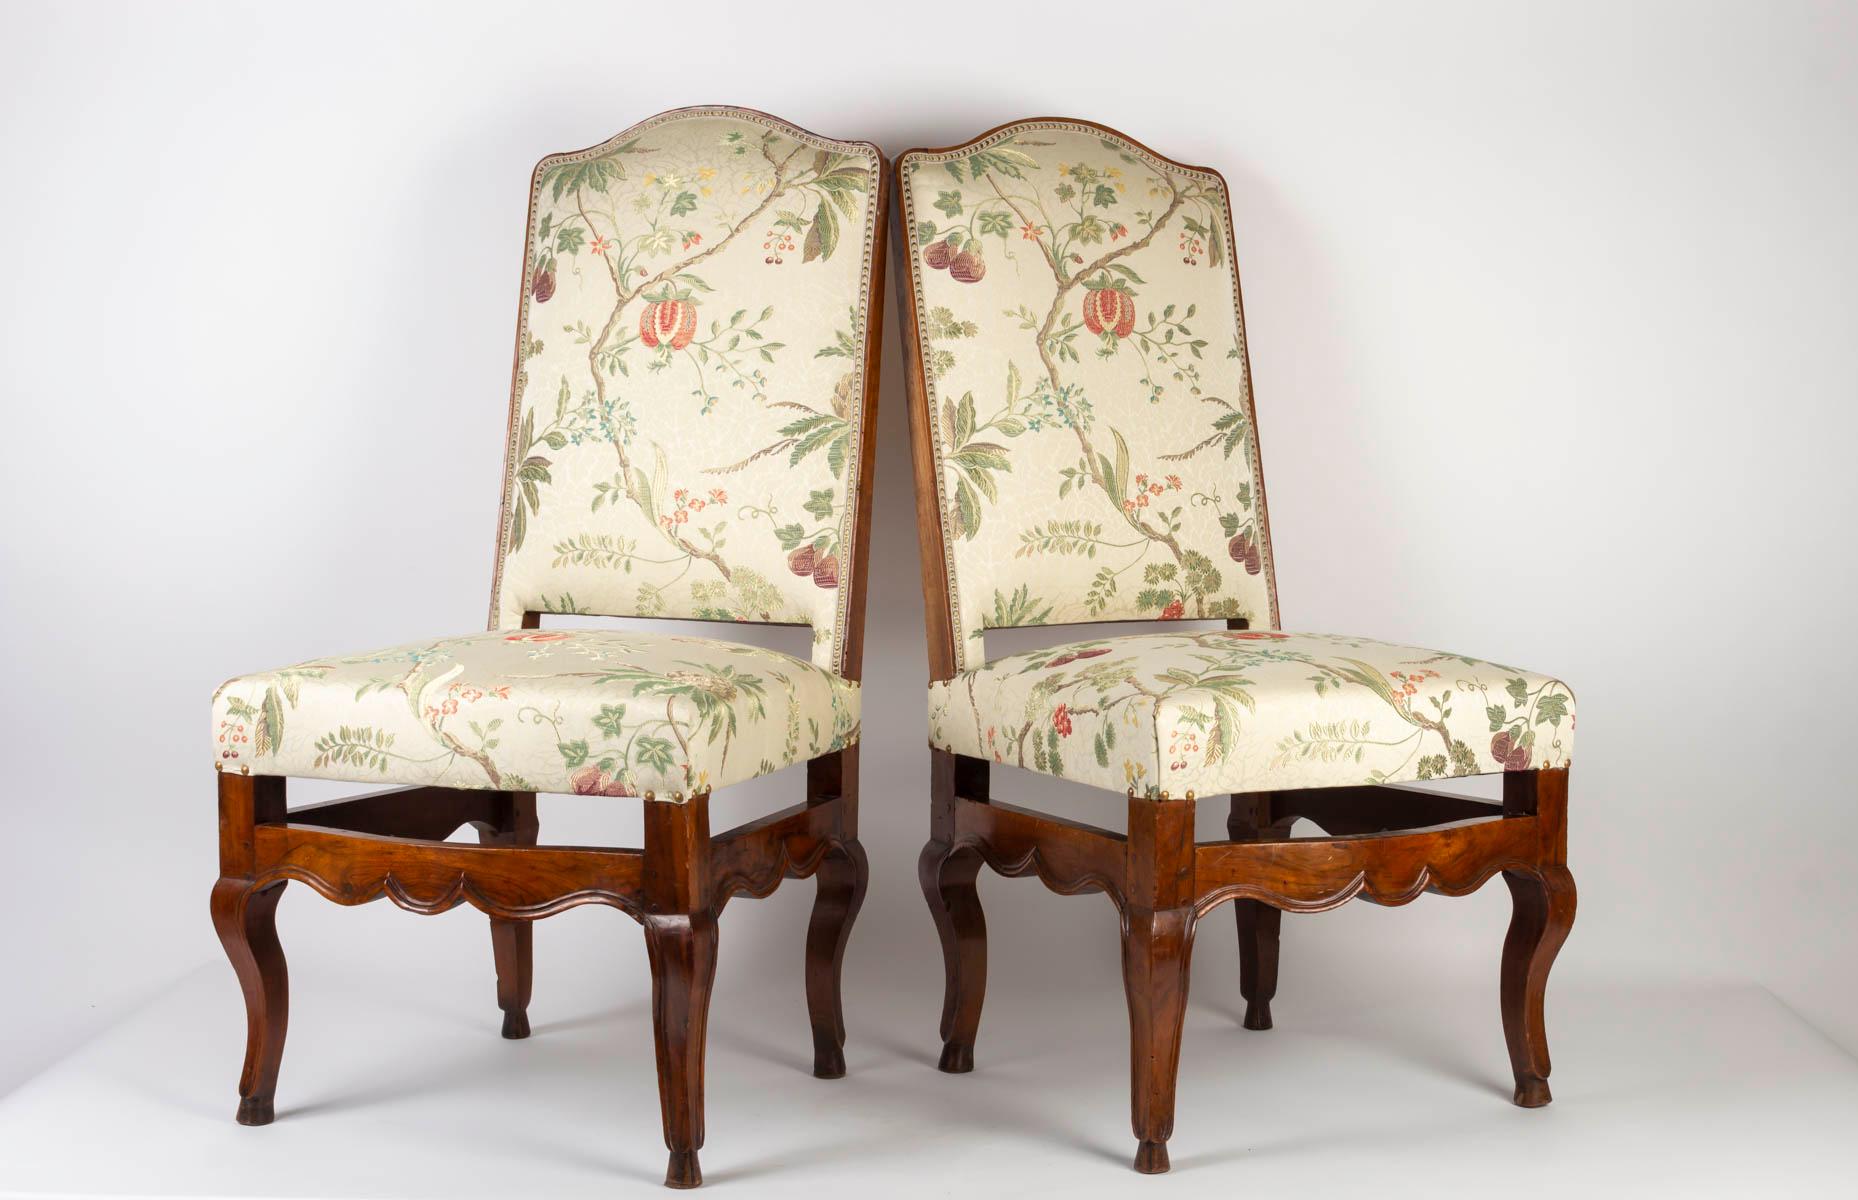 Louis XV Pair of Walnut Provençal Chairs, 18th Century Period